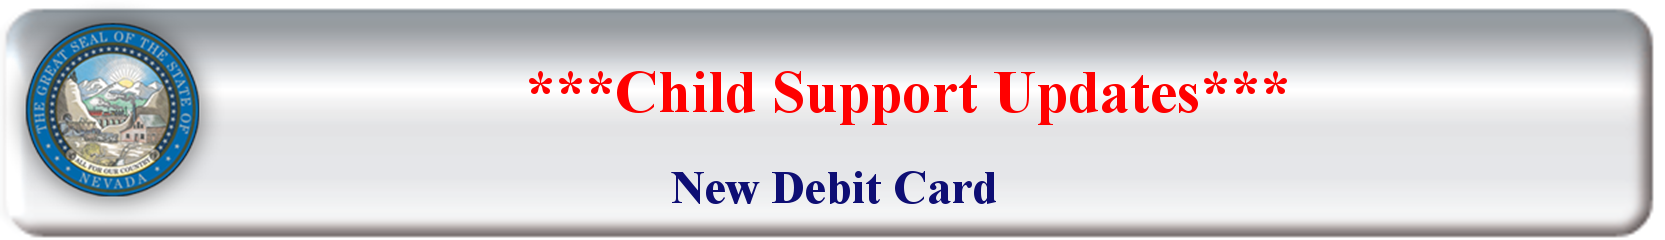 CS_New Debit_Card_2